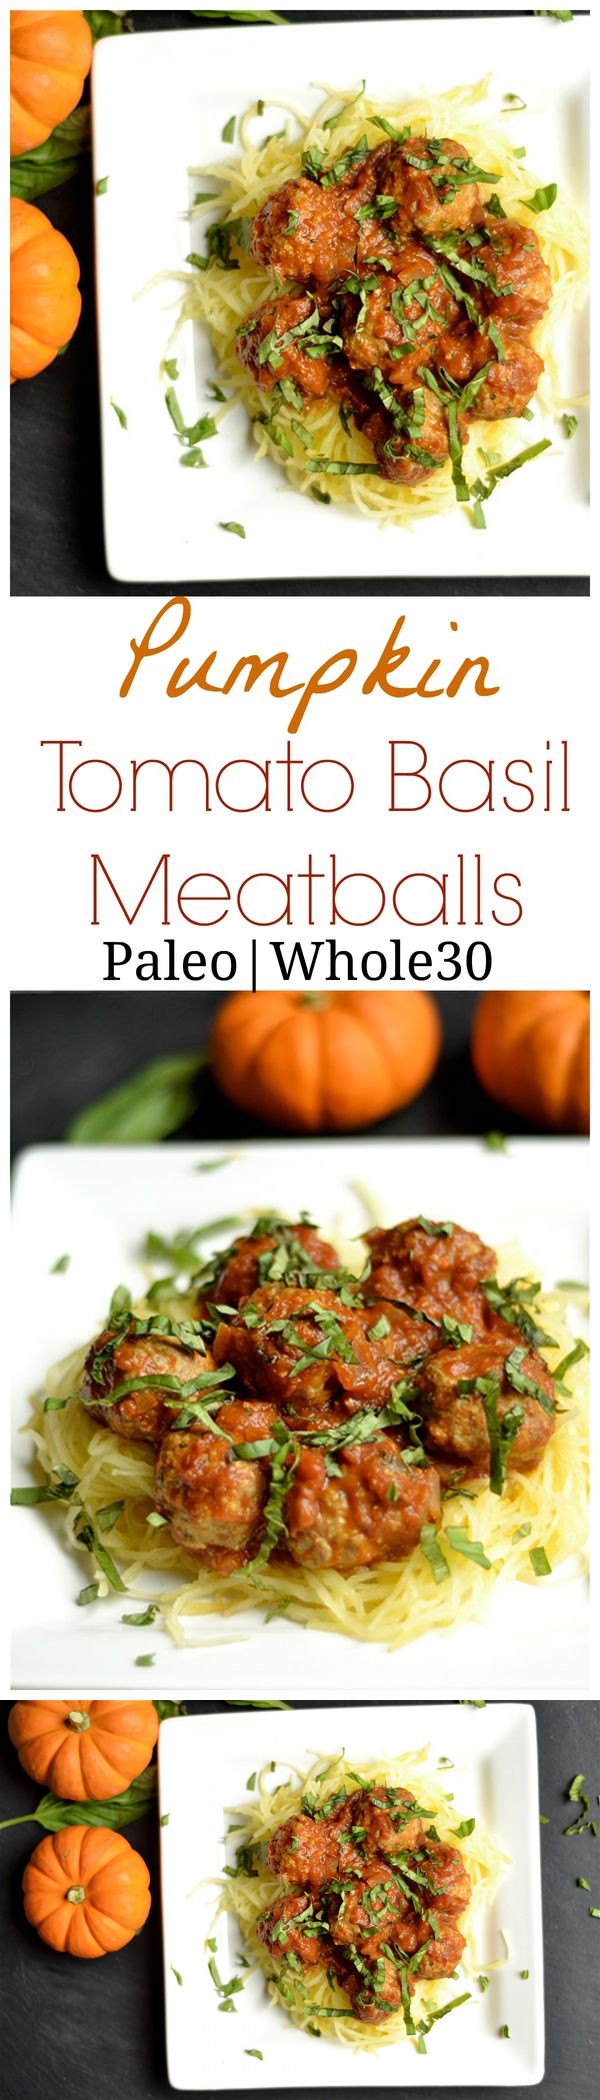 Pumpkin Tomato Basil Meatballs